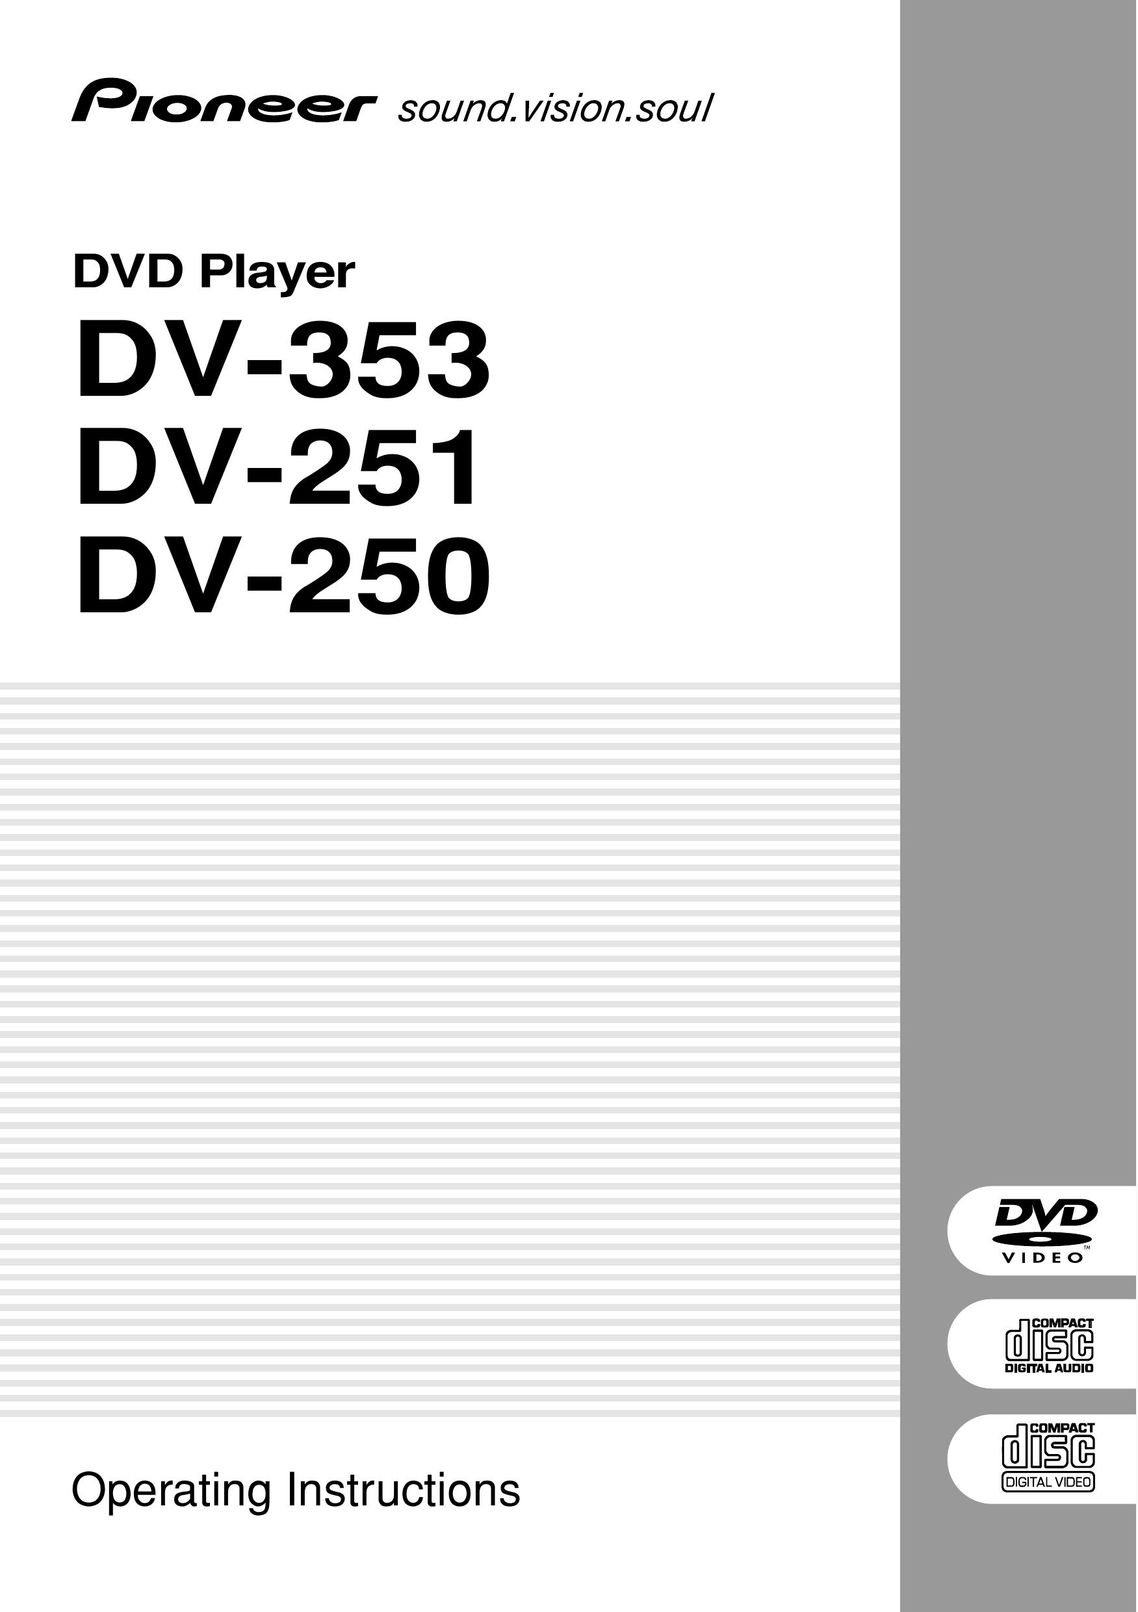 Pioneer DV-251 DVD Player User Manual